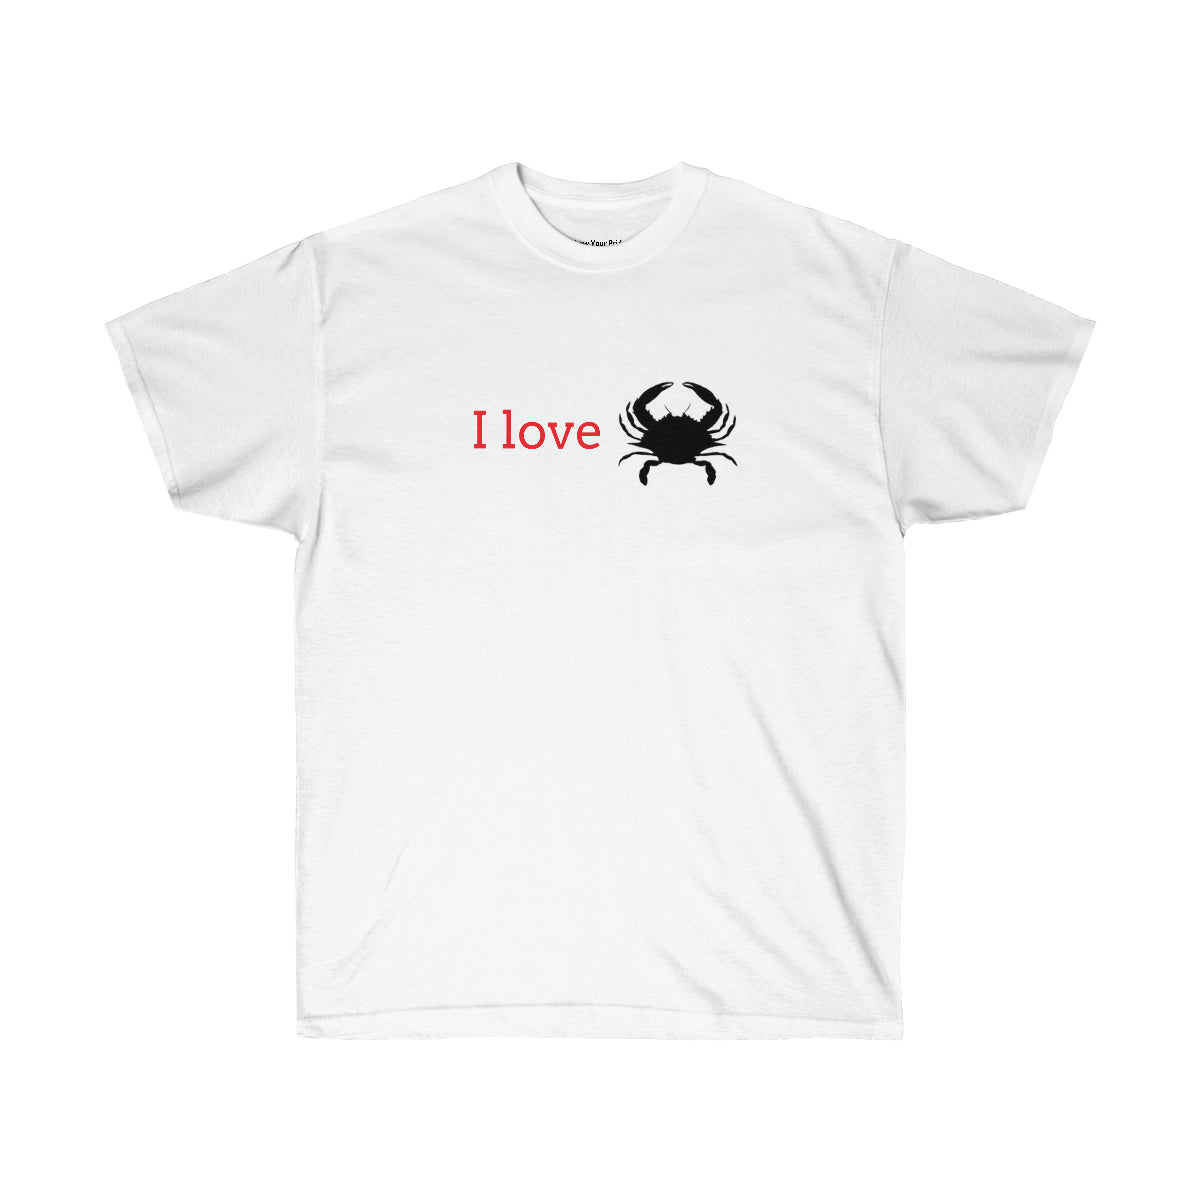 I love Crab T-shirt